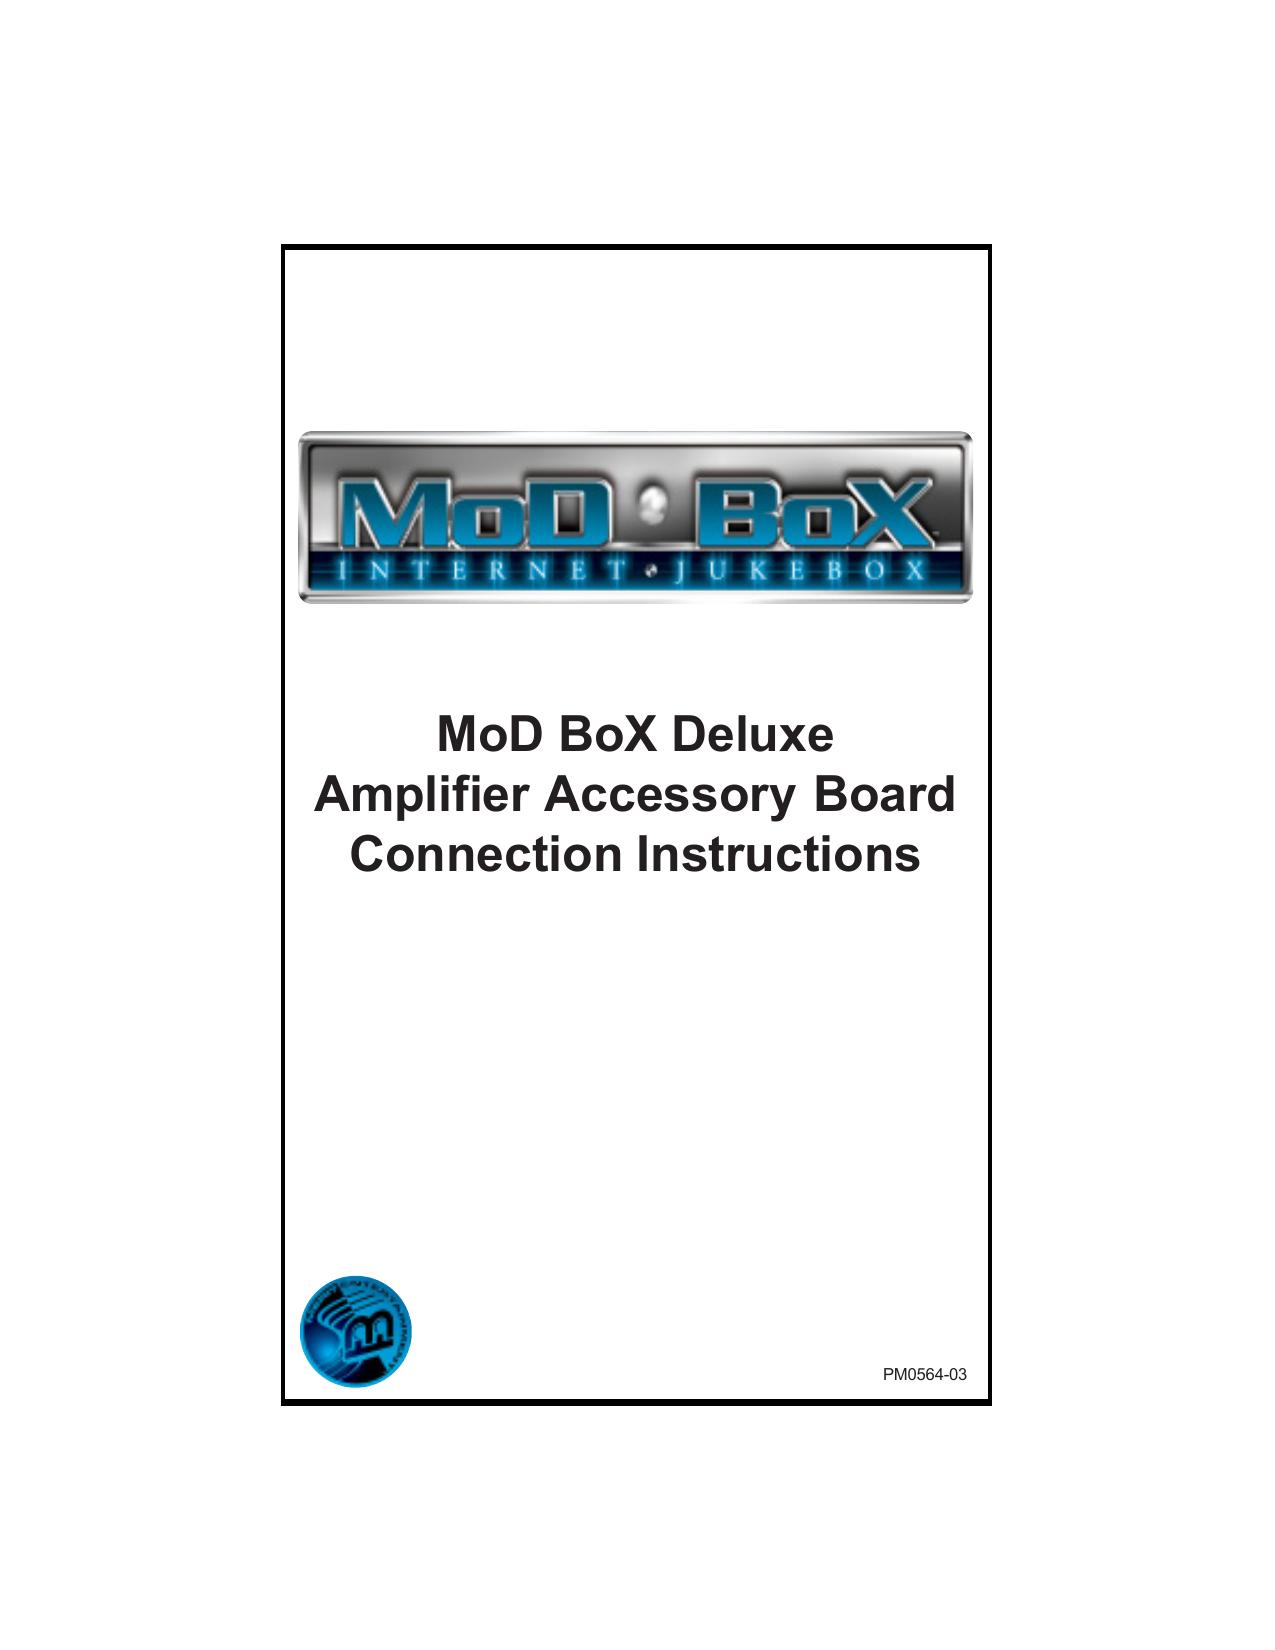 PM0564-03 amp accessory board_to accompany deluxe version unreleased.pmd